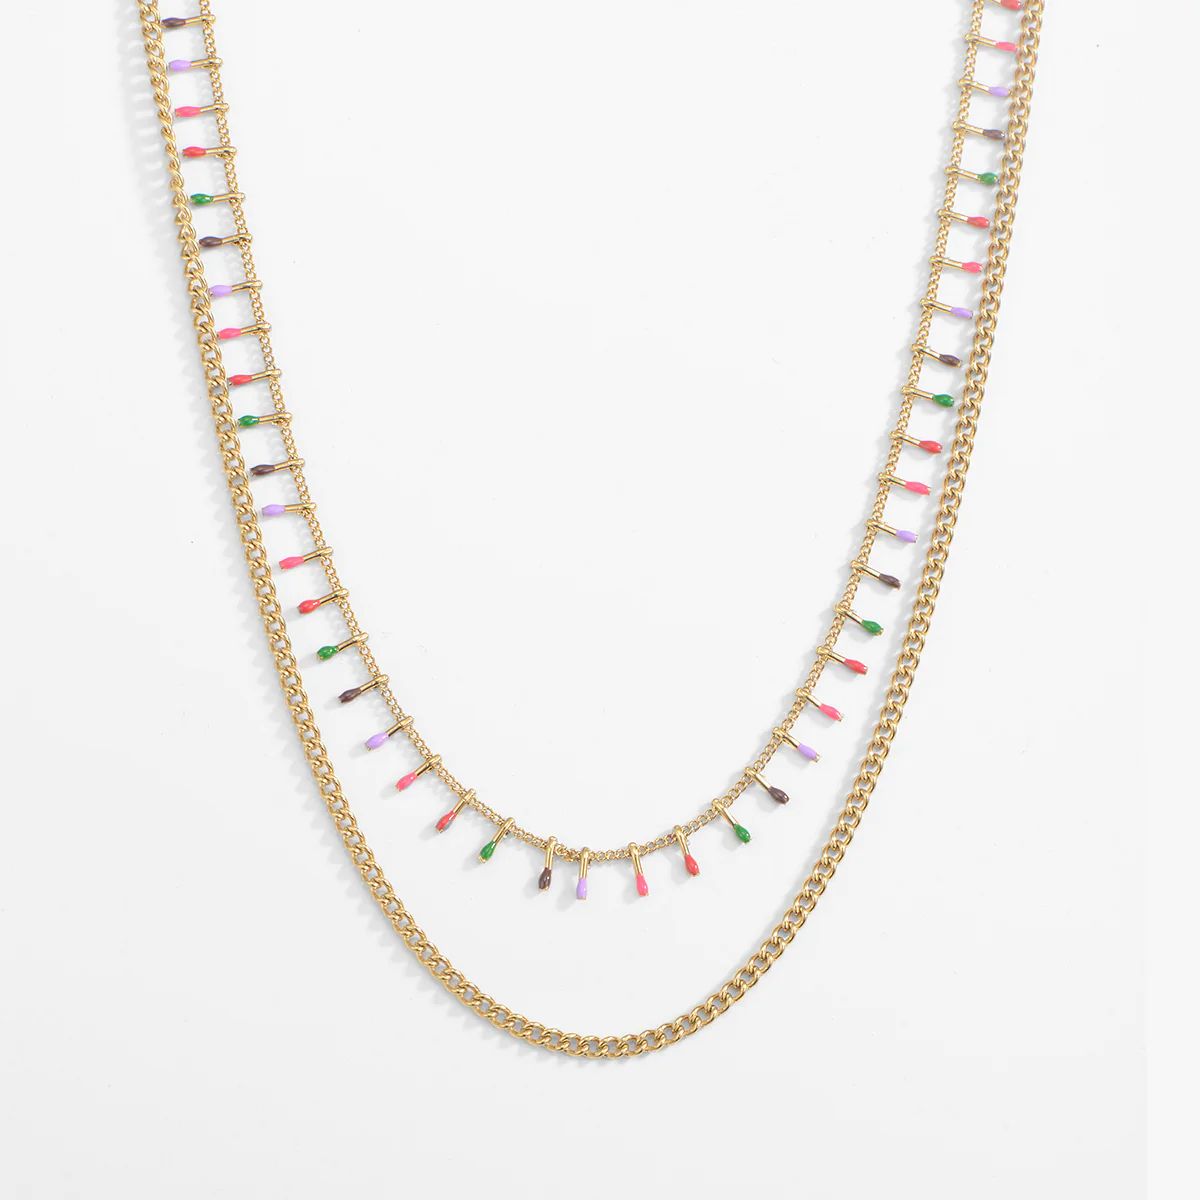 Colorburst Layered Necklace | Victoria Emerson